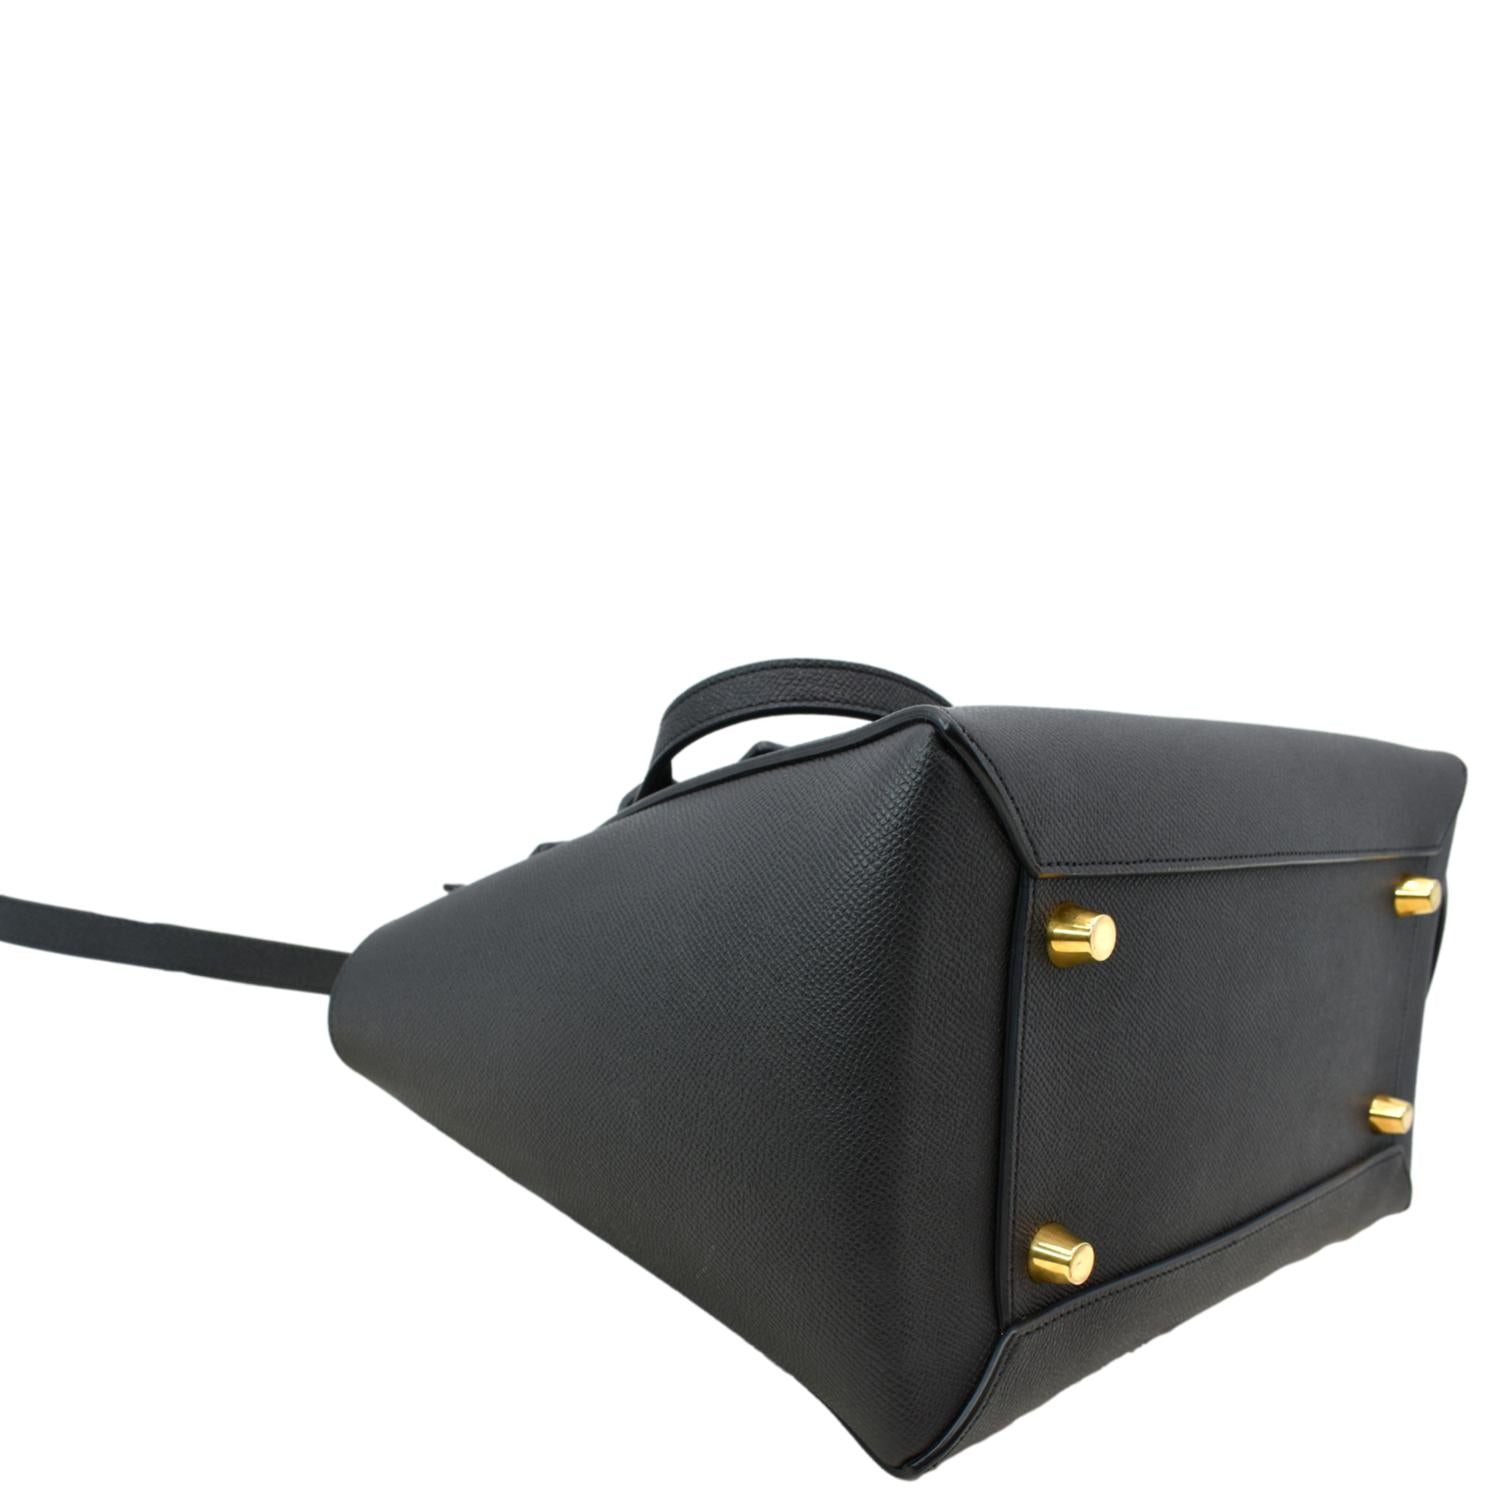 Celine Micro Belt Bag in Grained Calfskin Leather